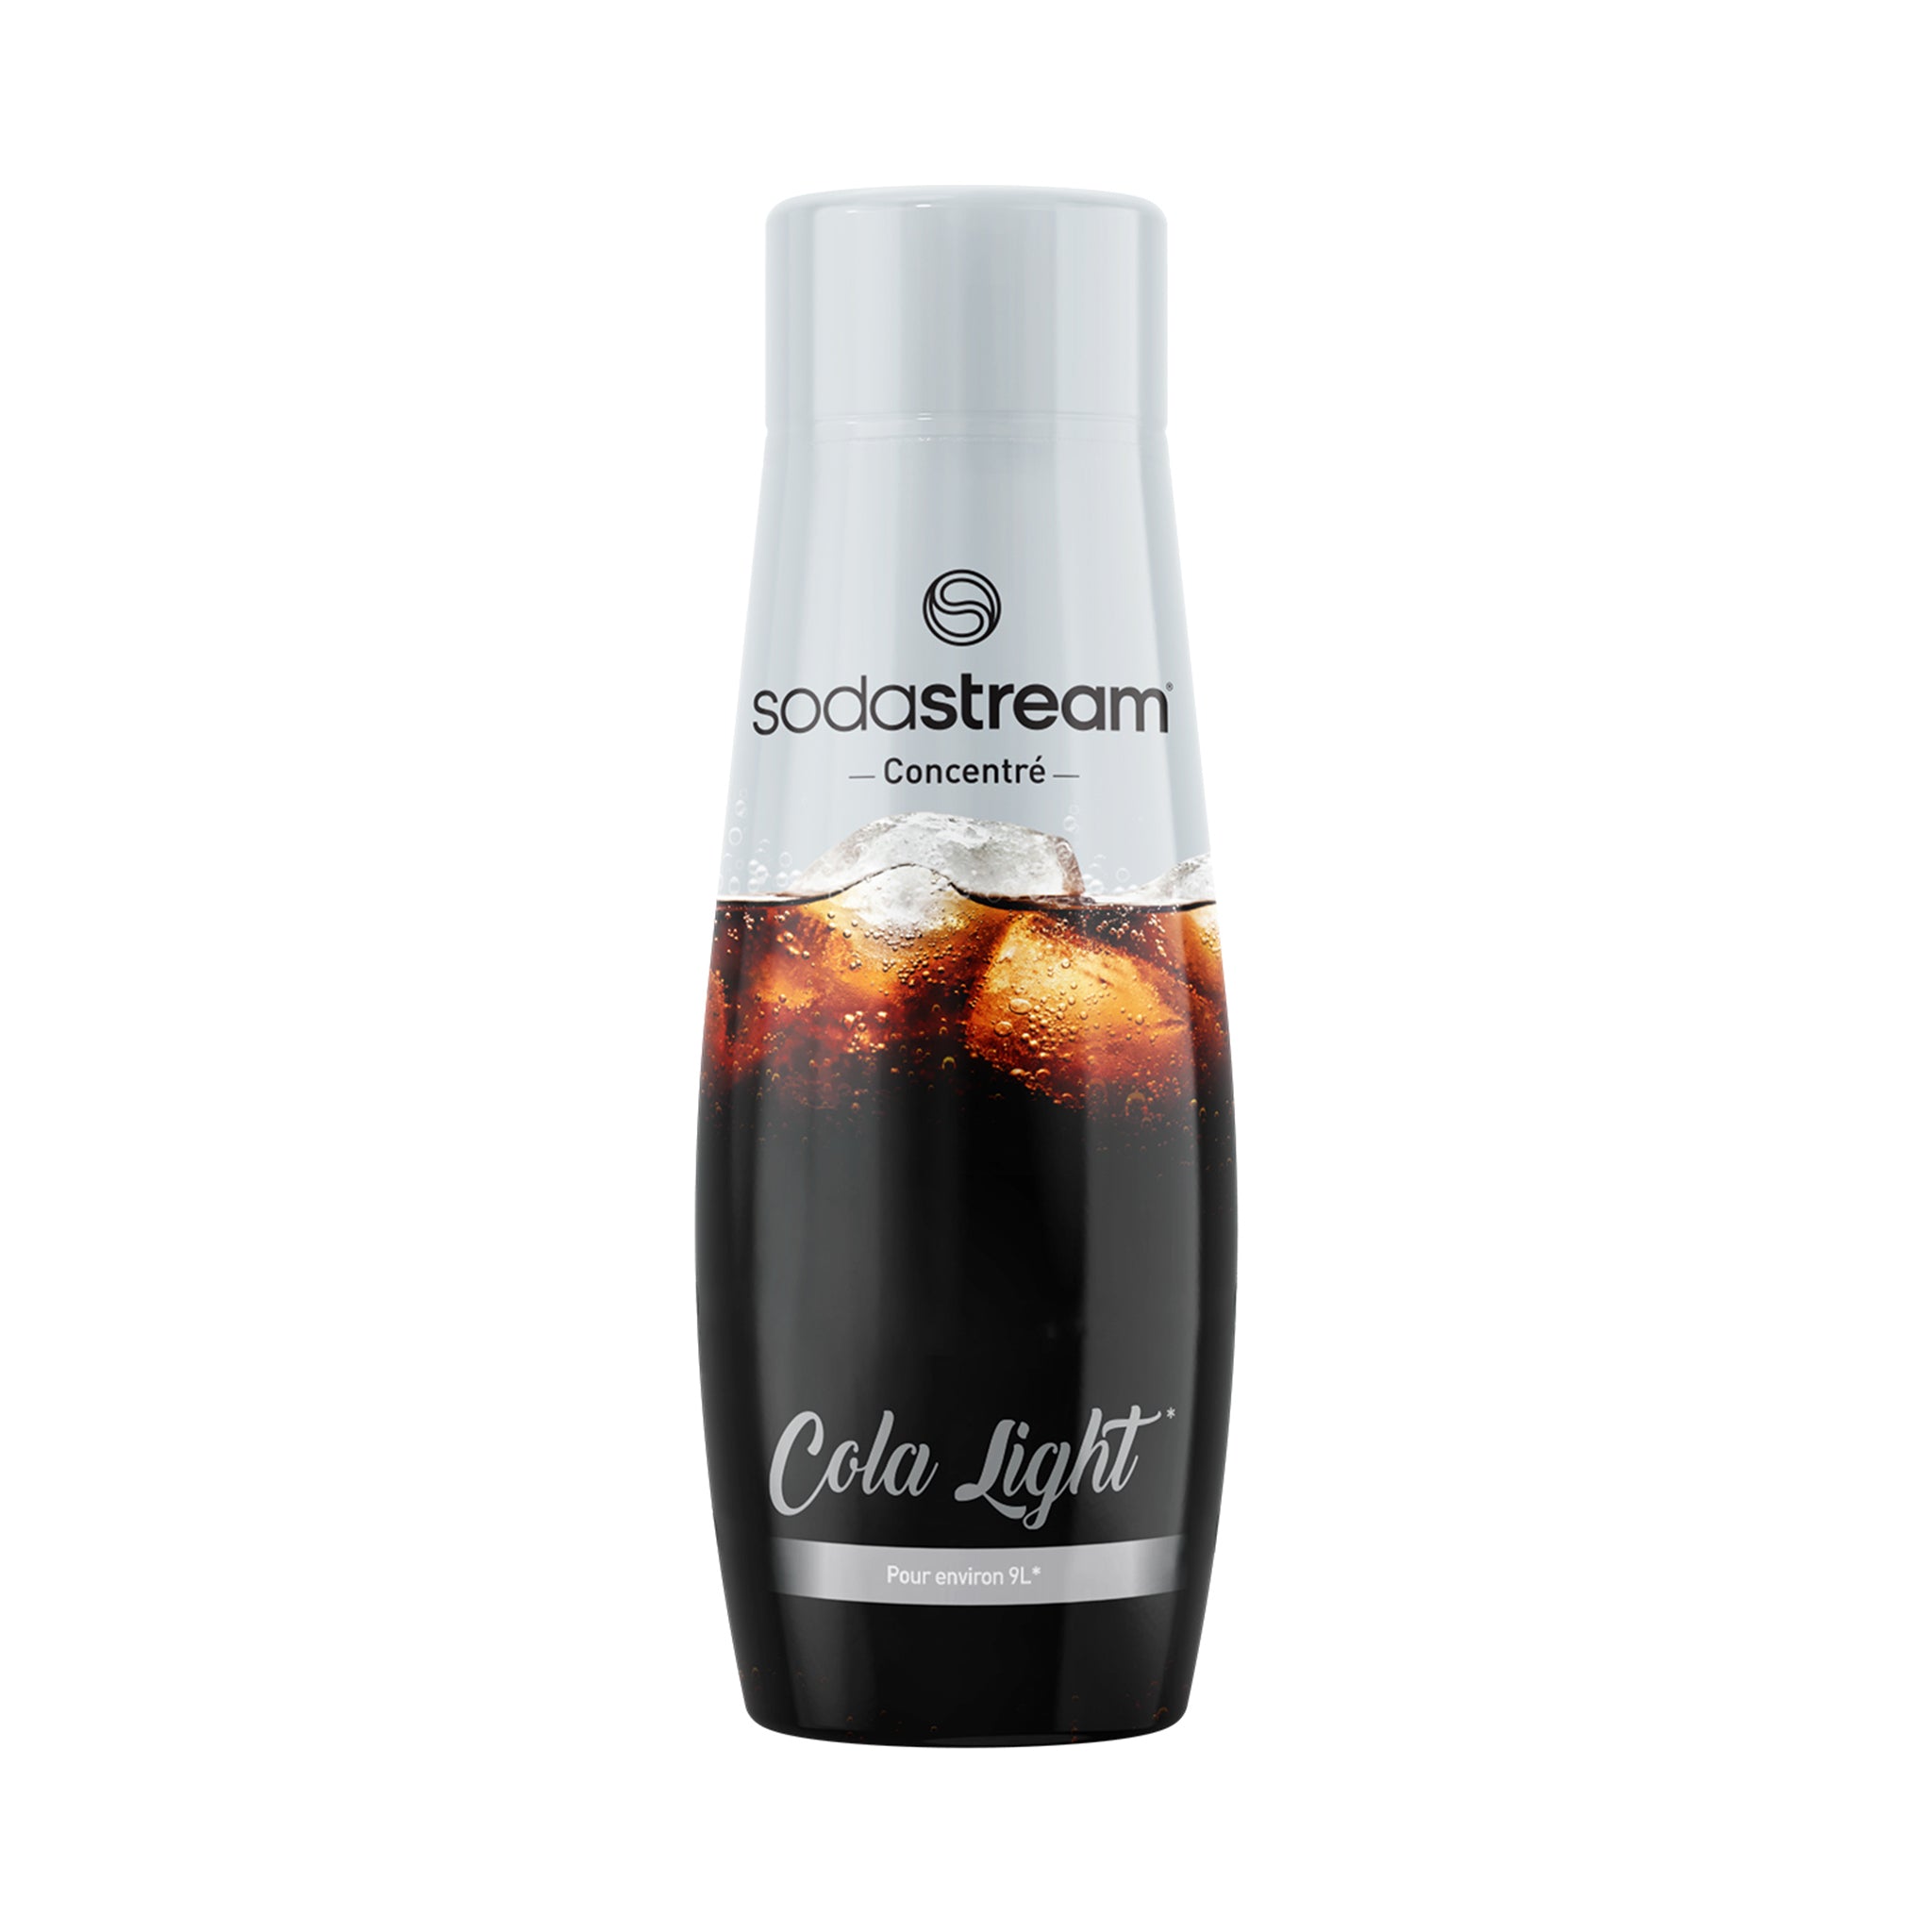 Cola Light 440ml sodastream